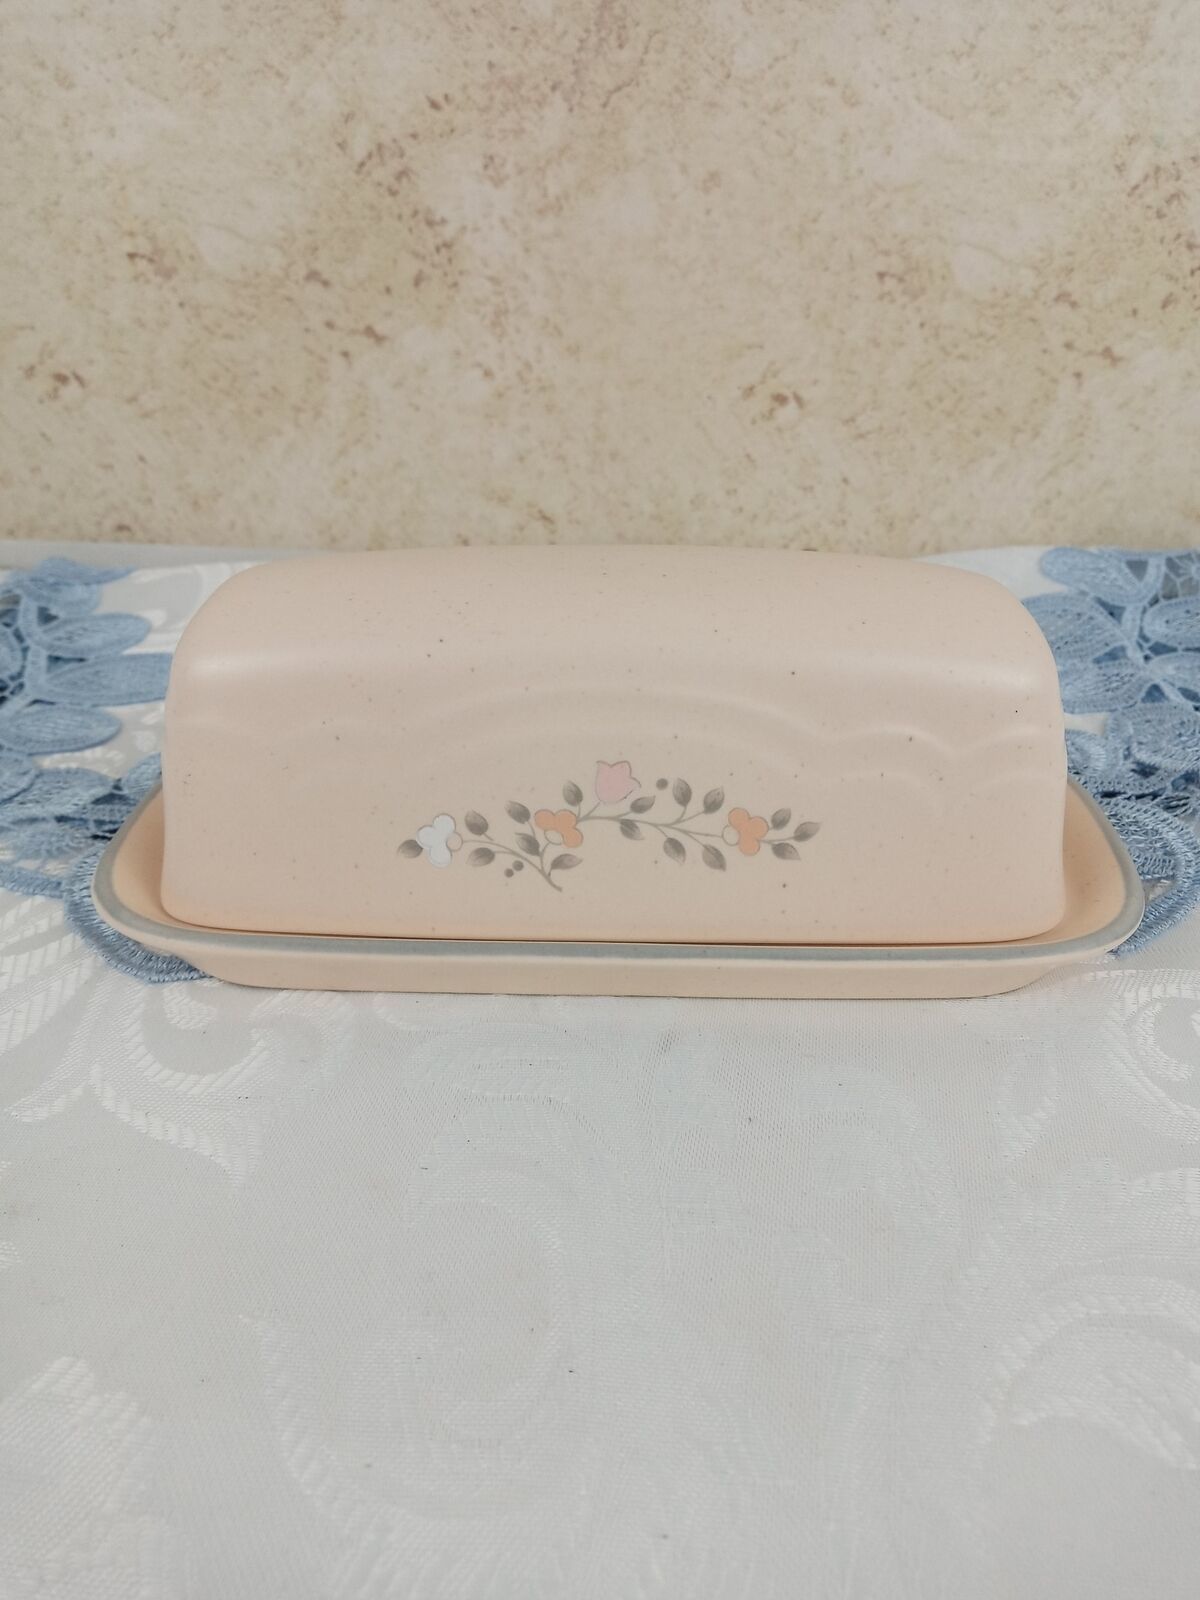 Pfaltzgraff Remembrance Butter Dish Cream w/ Pink, Orange & White Flowers 6.5x3" - $15.83